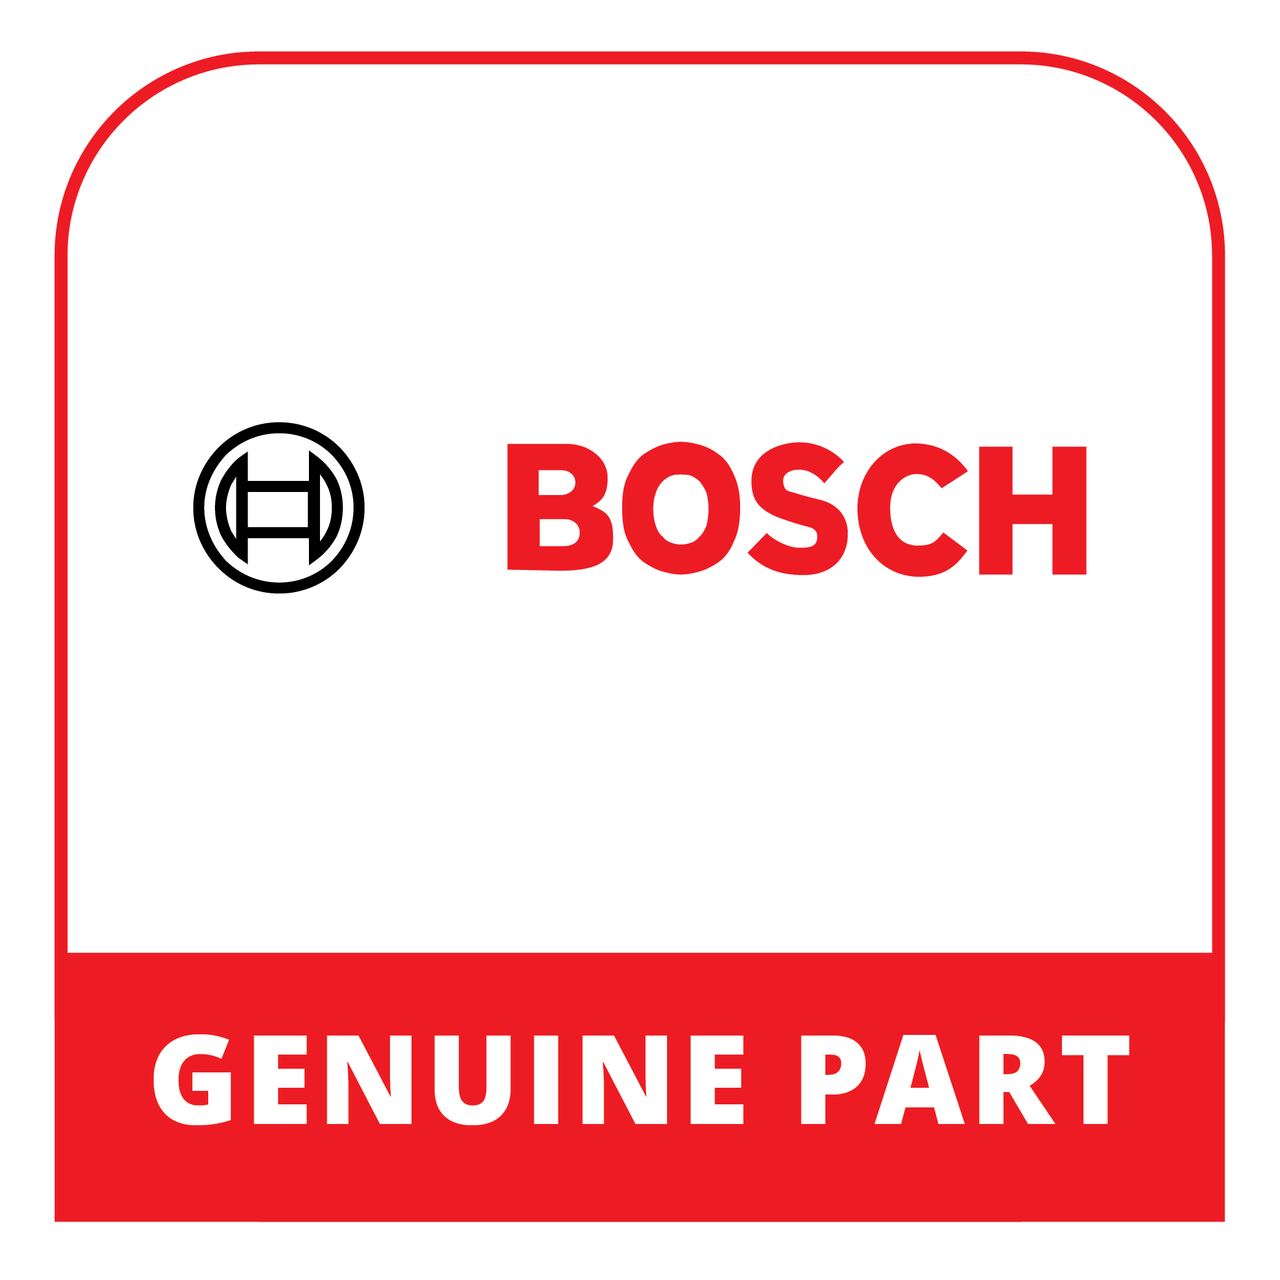 Bosch (Thermador) 20002125 - Lower Crockery Basket - Genuine Bosch (Thermador) Part